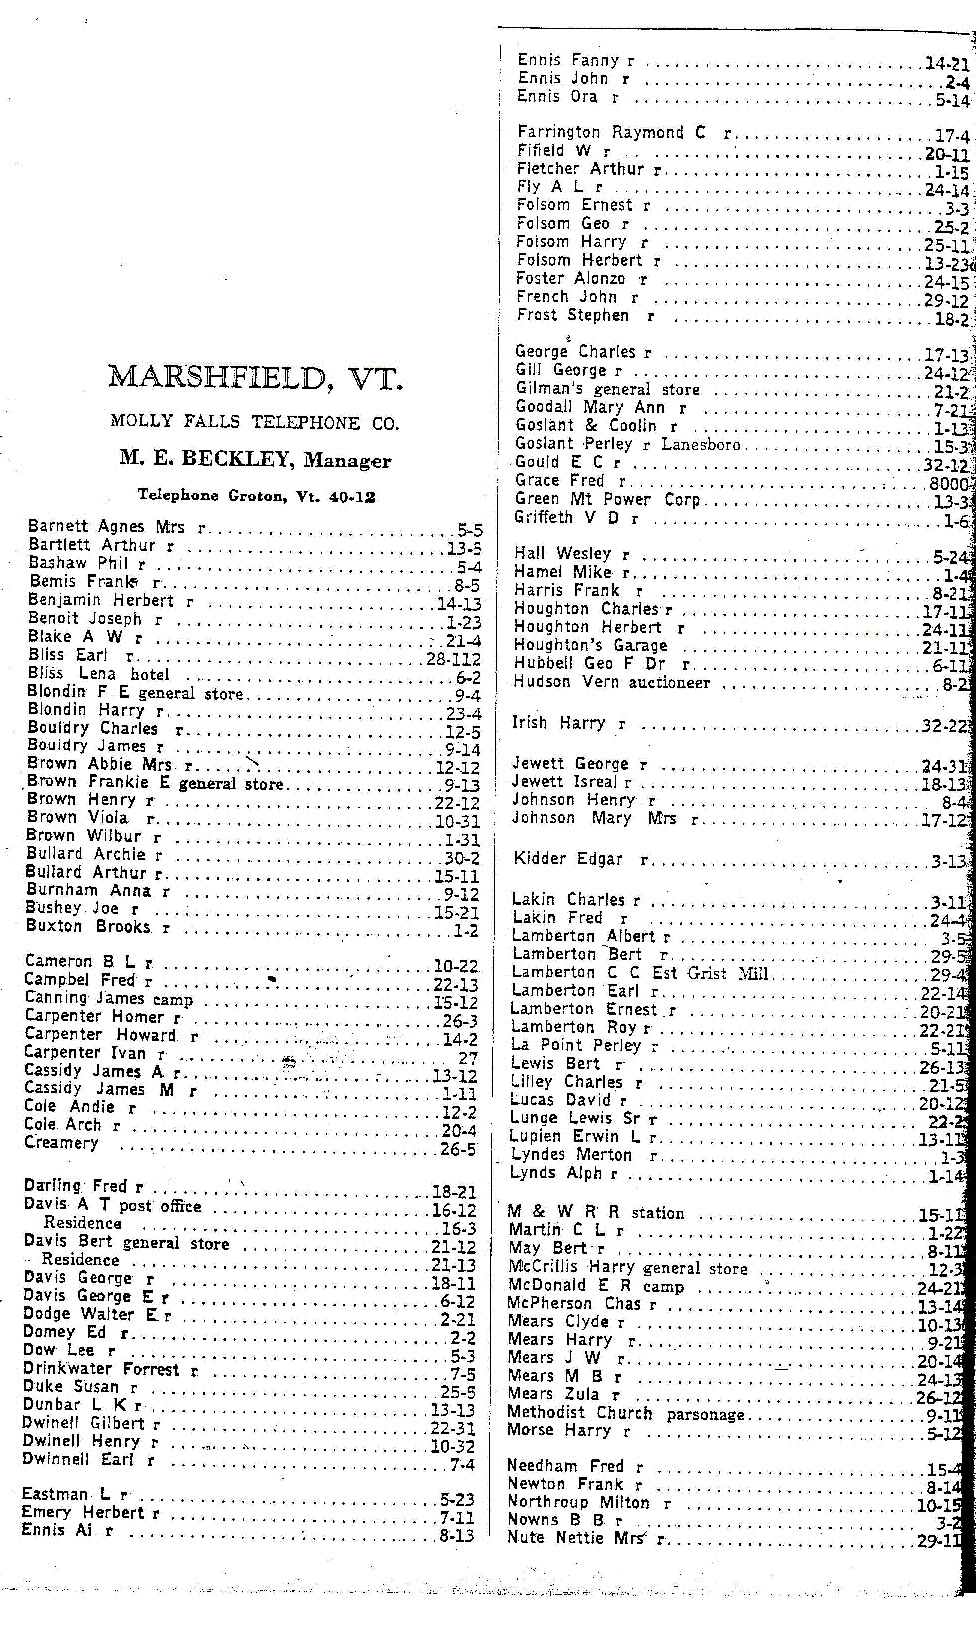 1928 Marshfield, Vt Telephone Book - Page 1